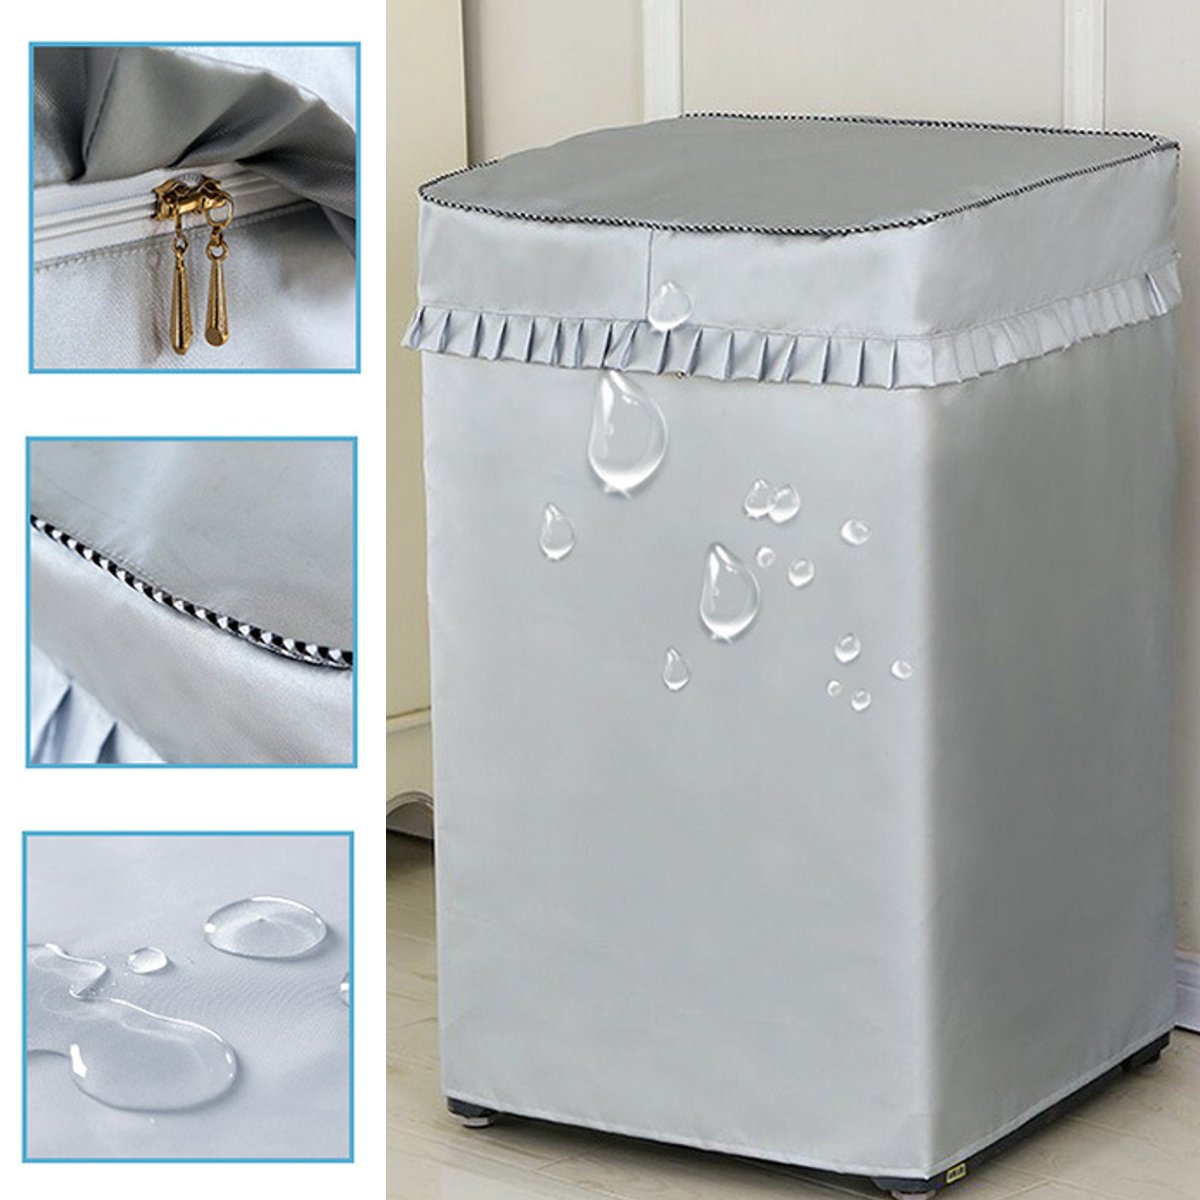 Washing-Machine-Dustproof-Zipper-Cover-Turbine-Roller-Washer-Sunscreen-Waterproof-Protector-1705913-3